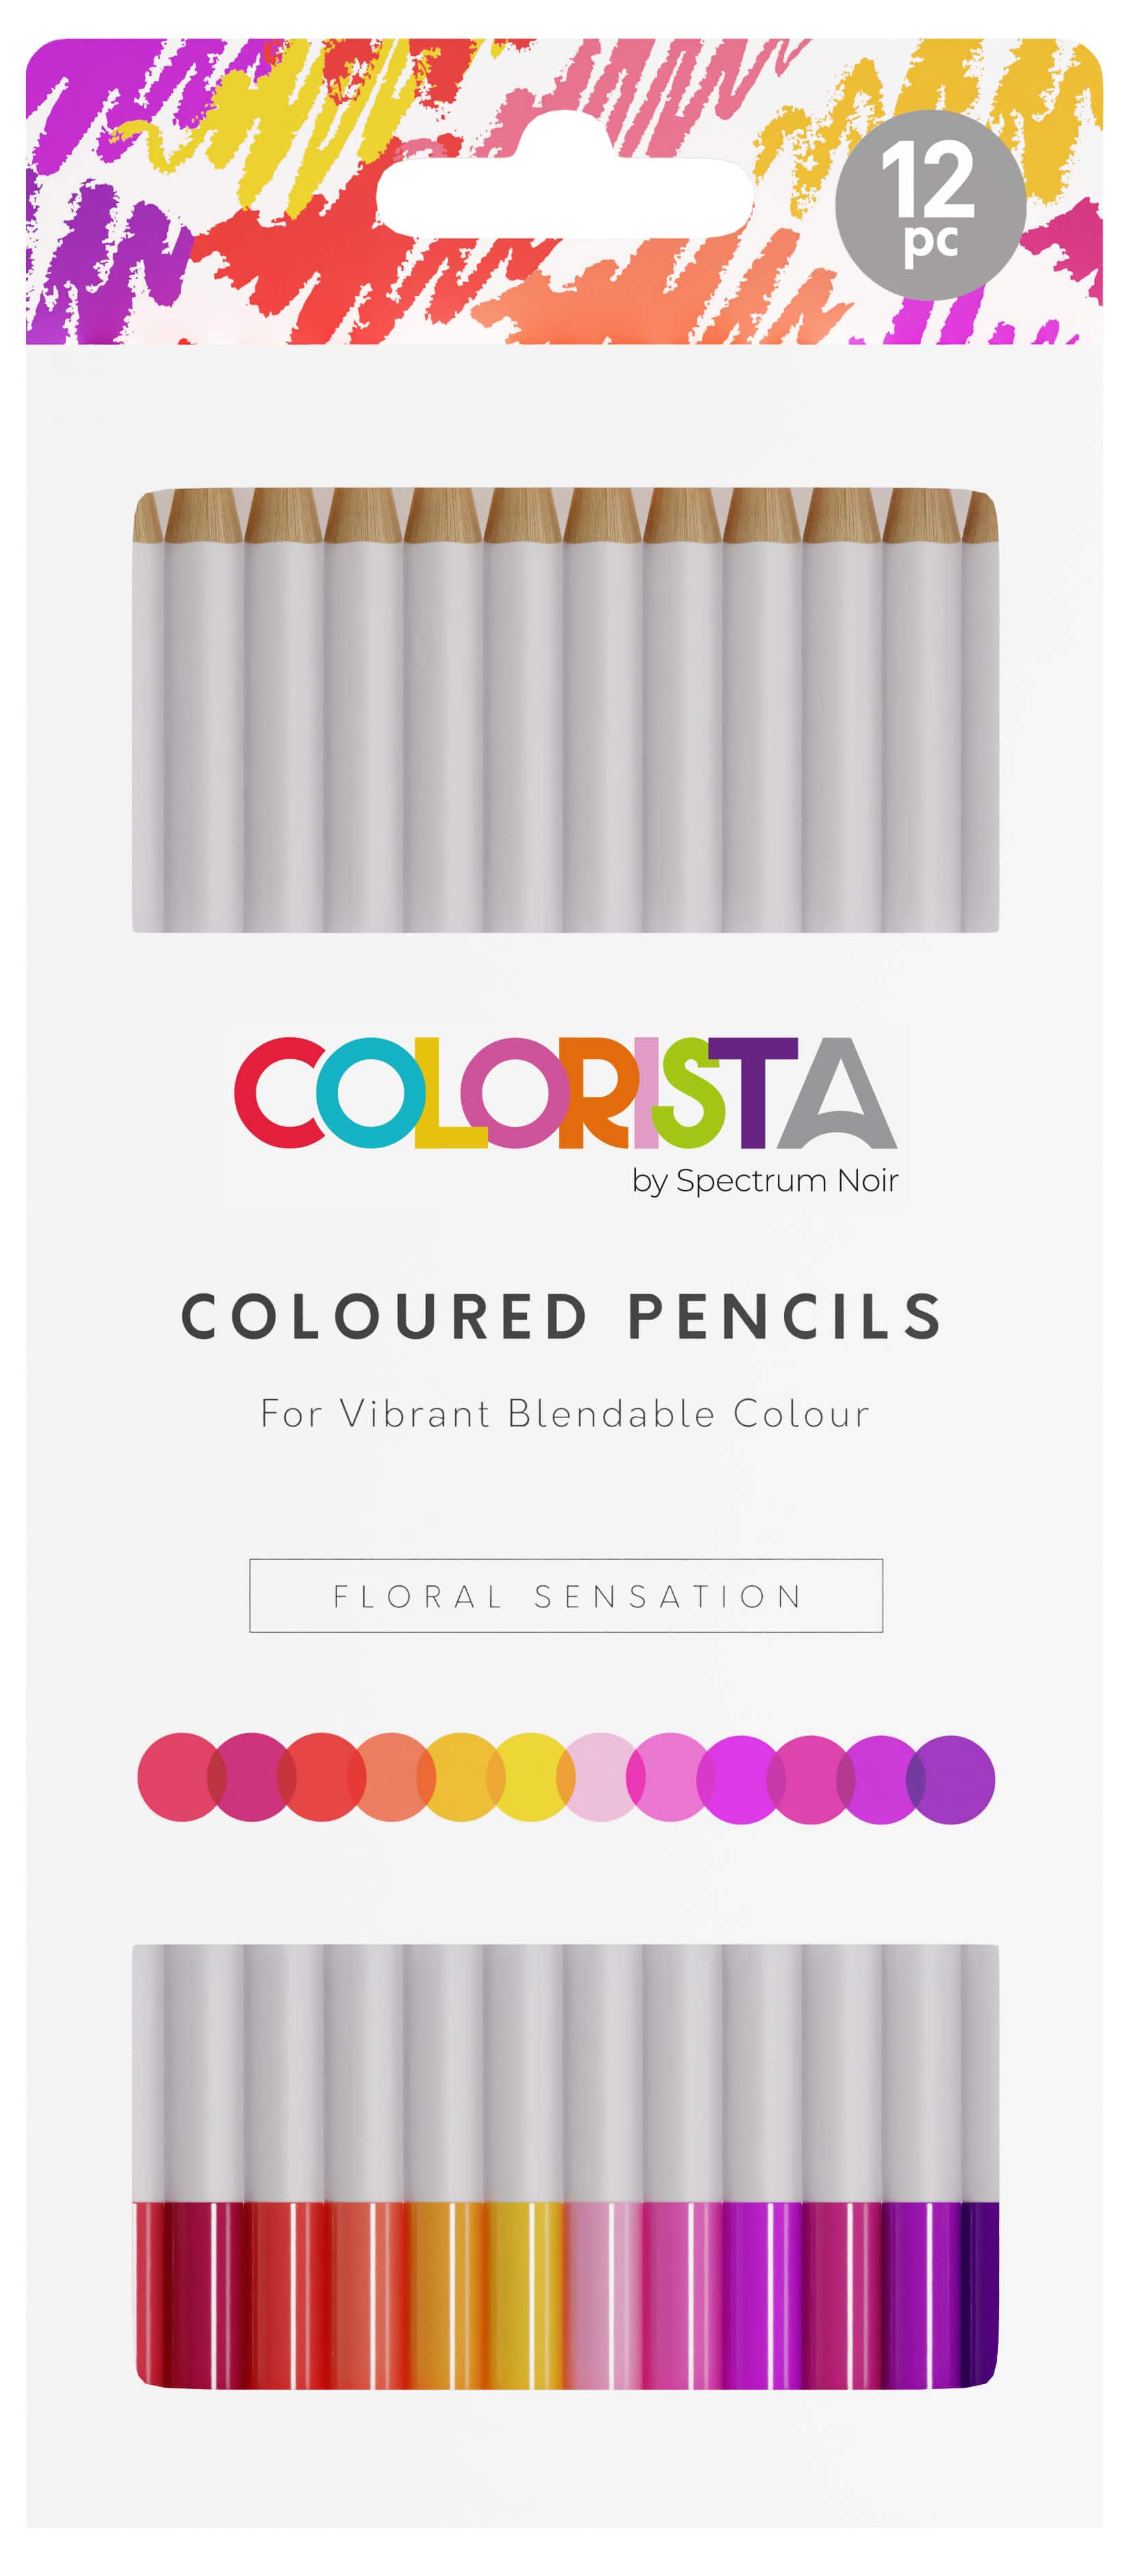 Colorista Floral Sensation Colored Pencils, 12ct.